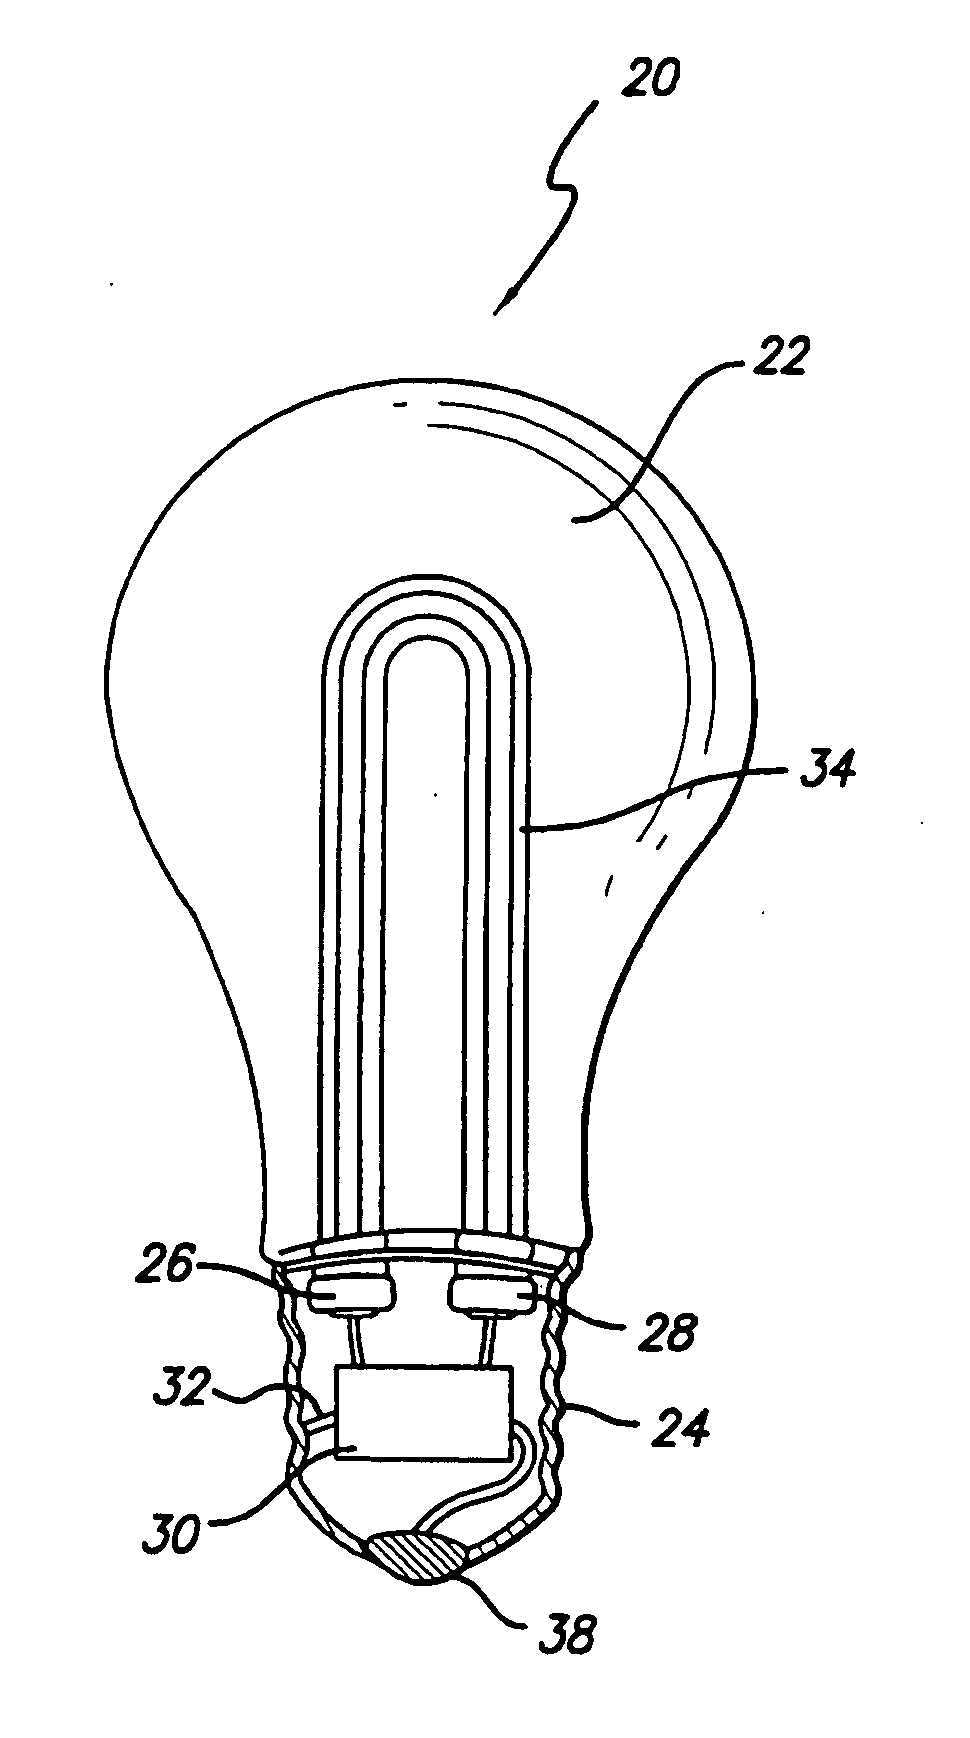 CCFL illuminated device and method of use